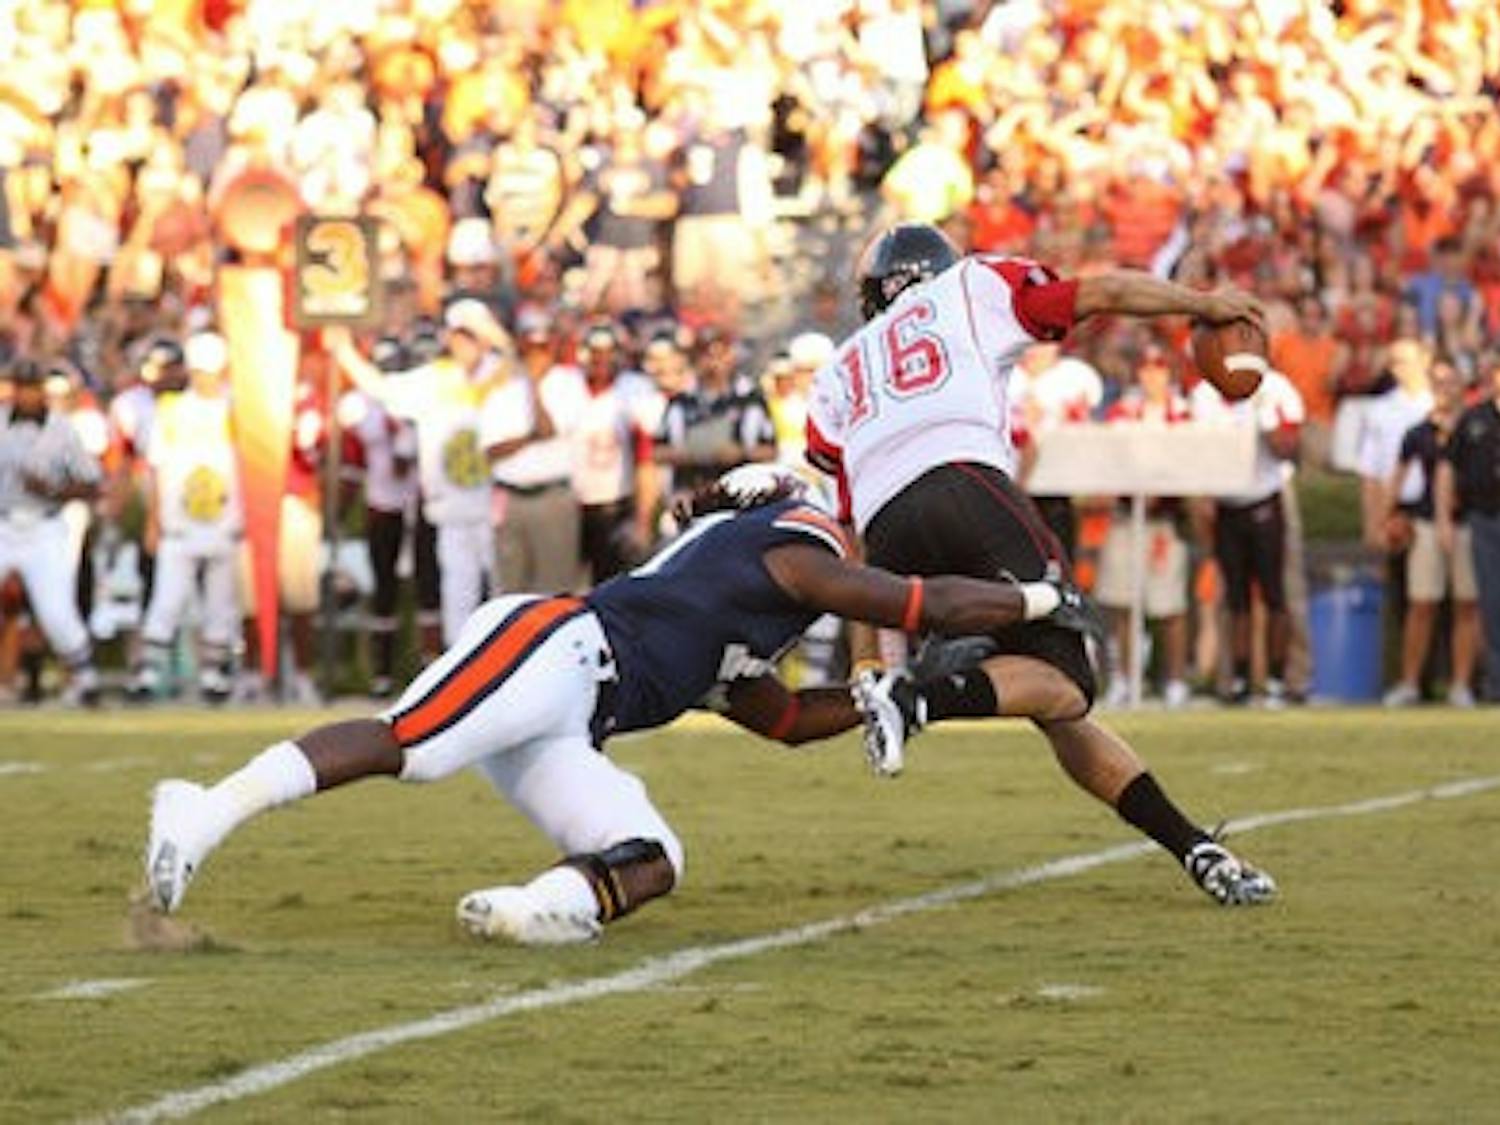 Senior linebacker Josh Bynes brings down Arkansas State quarterback Ryan Aplin. (Emily Adams / PHOTO EDITOR)